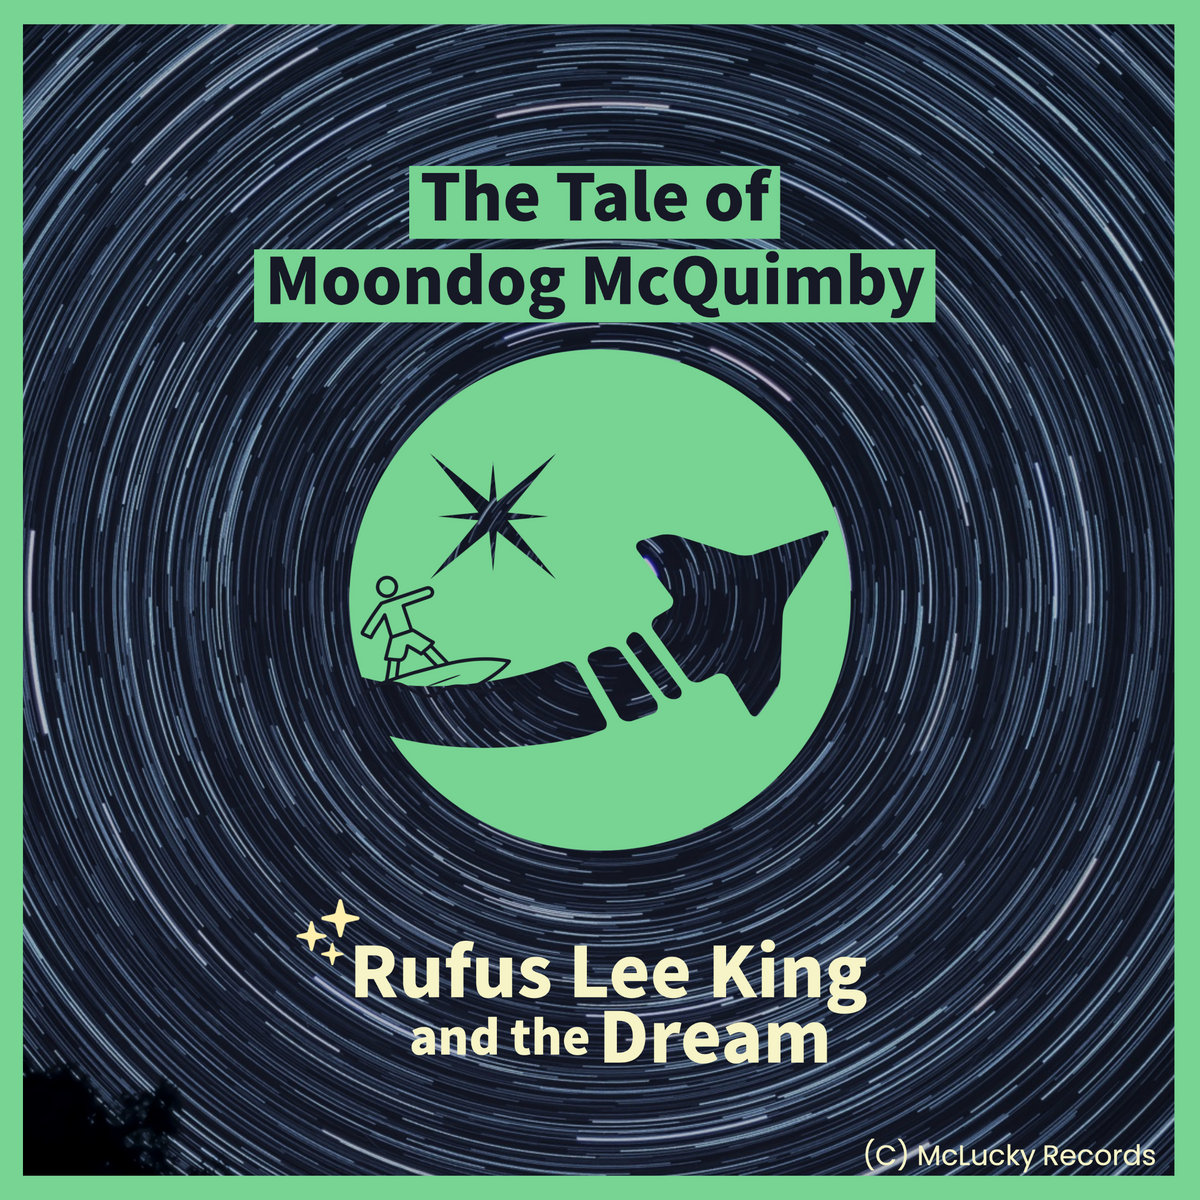 The Tale of Moondog McQuimby